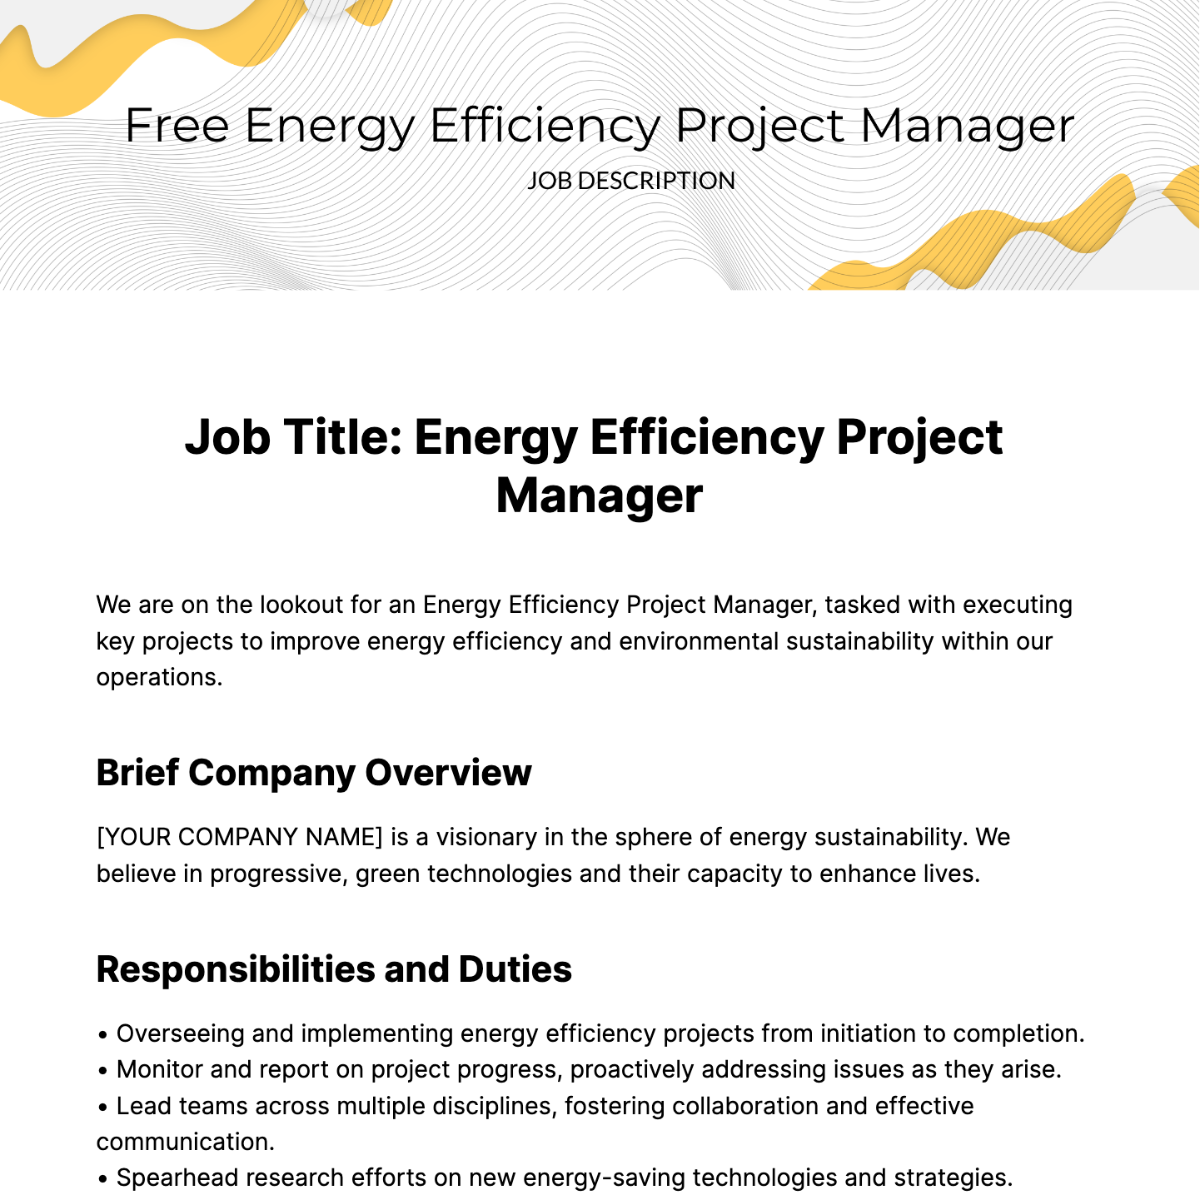 Free Energy Efficiency Project Manager Job Description Template